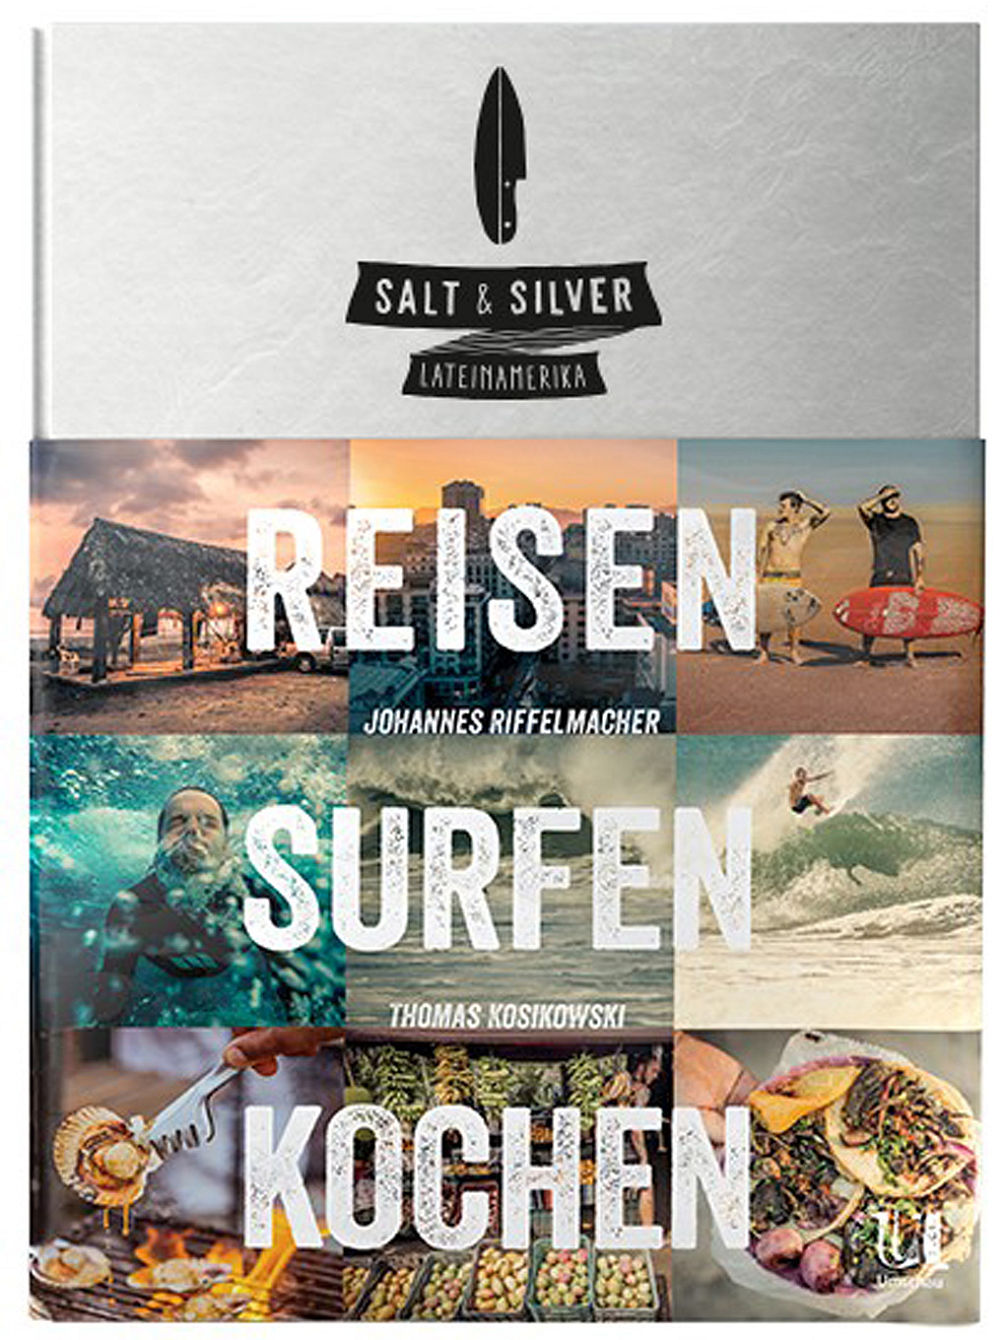 REISEN SURFEN KOCHEN/ Lateinamerika Livre